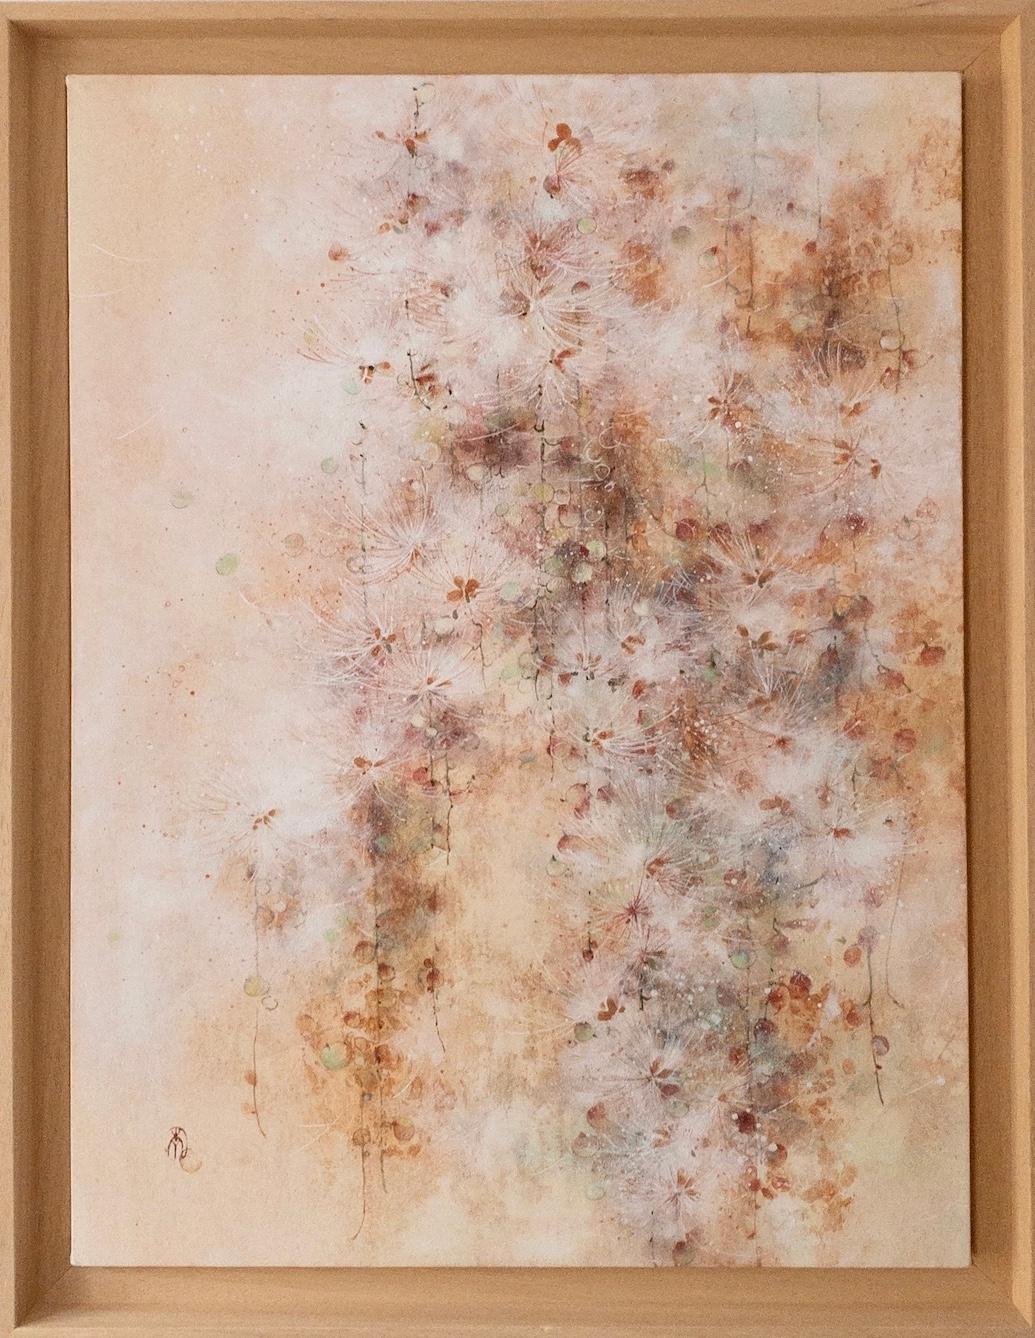 Flourishing by Chen Yiching - Contemporary nihonga painting, flowers